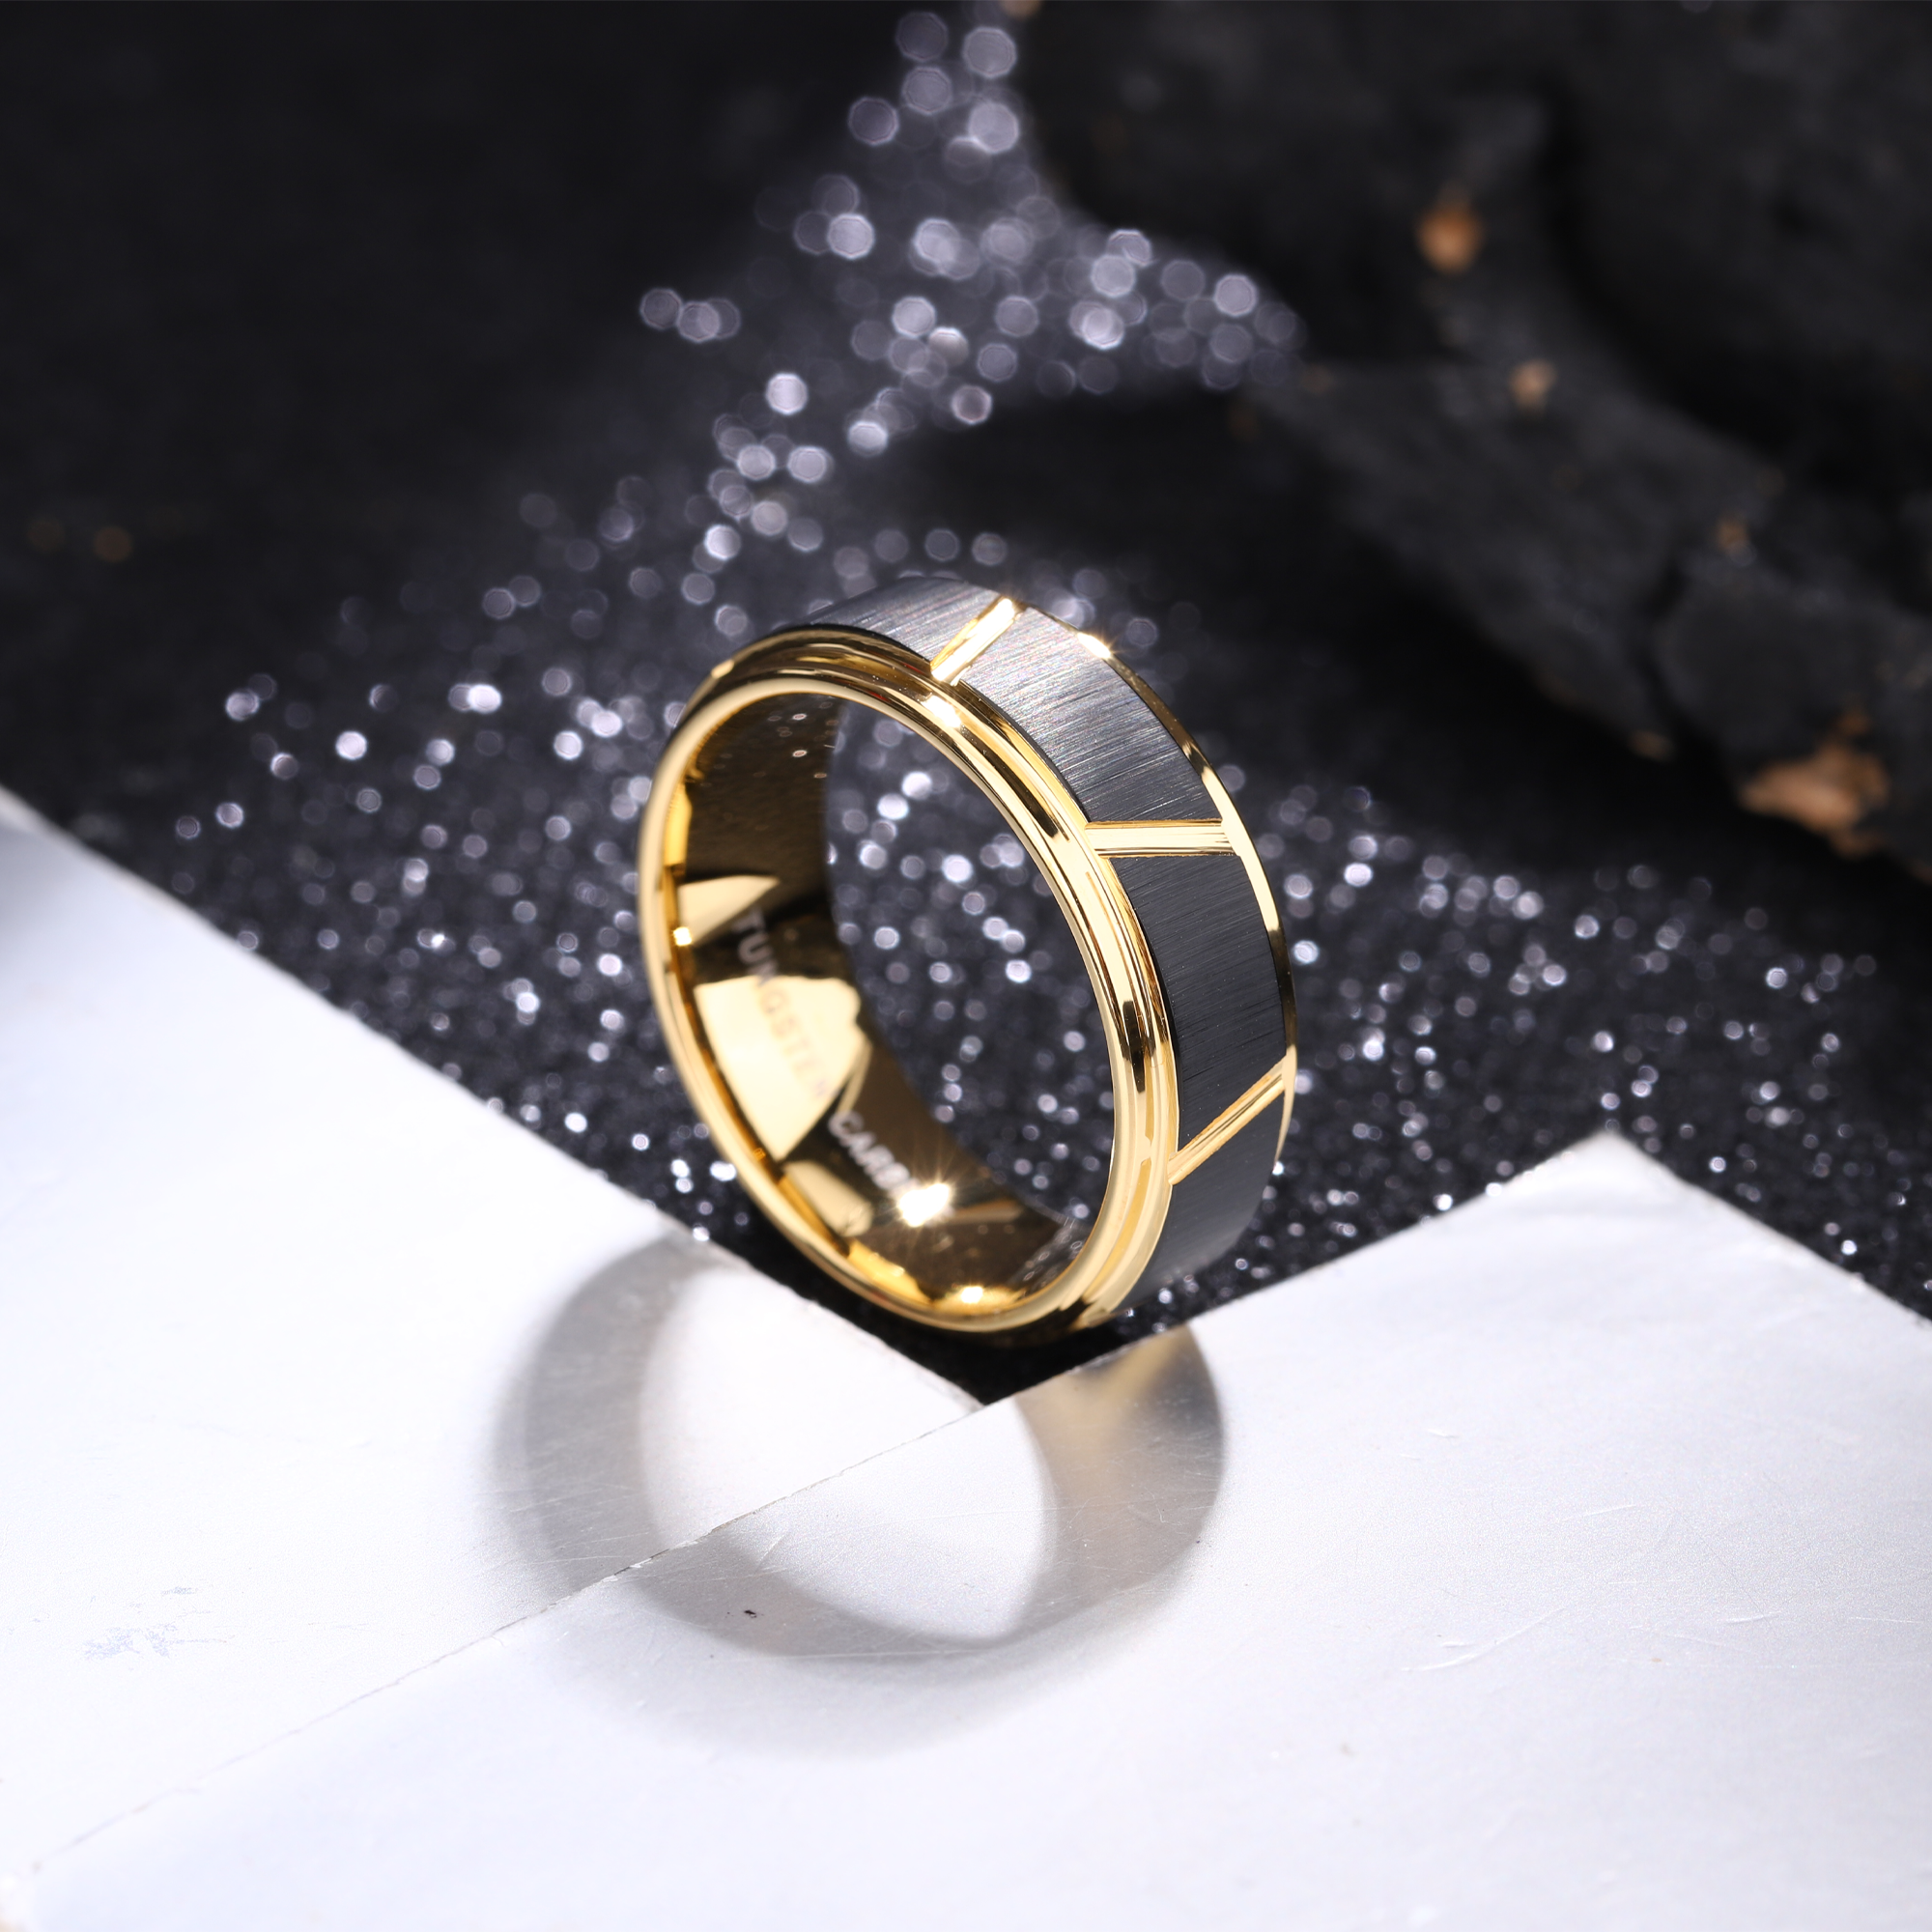 Black Gold Tungsten Ring KCLR 8